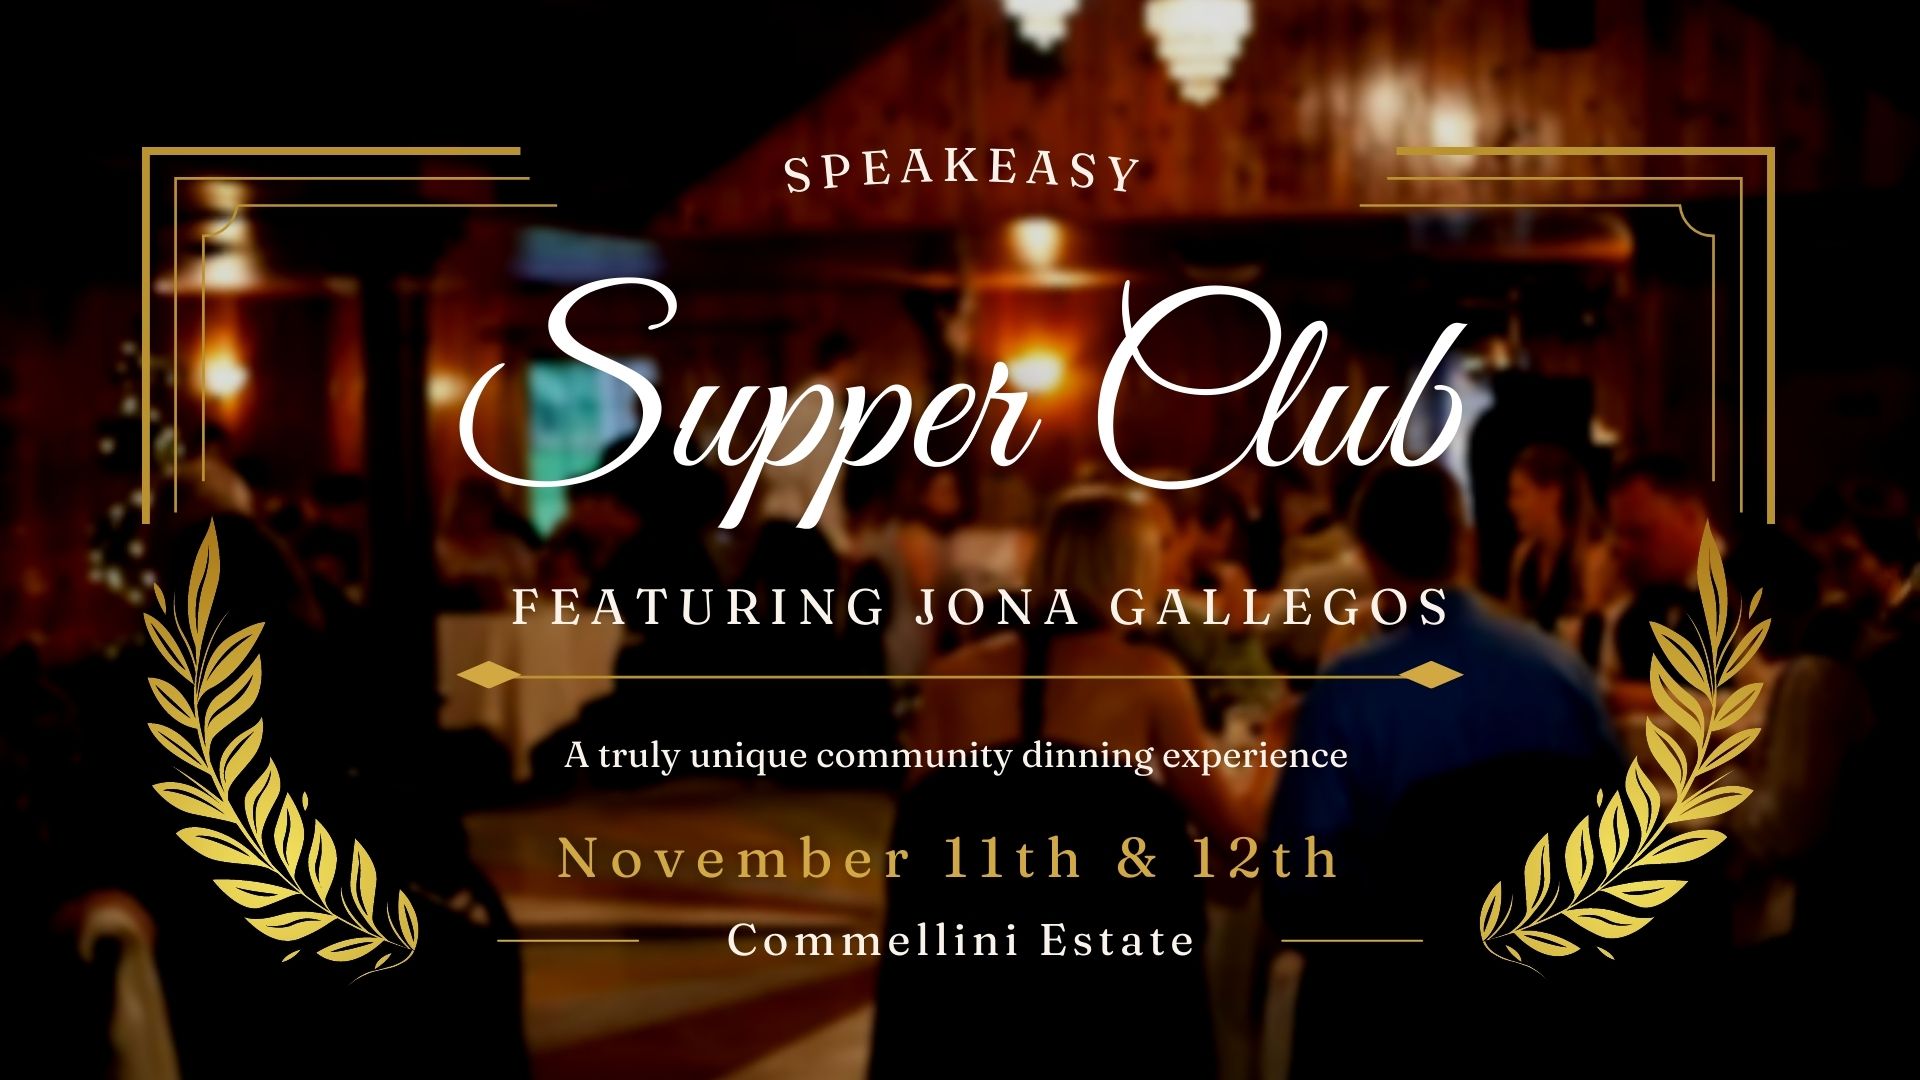 Speakeasy Supper Club Featuring Jona Gallegos